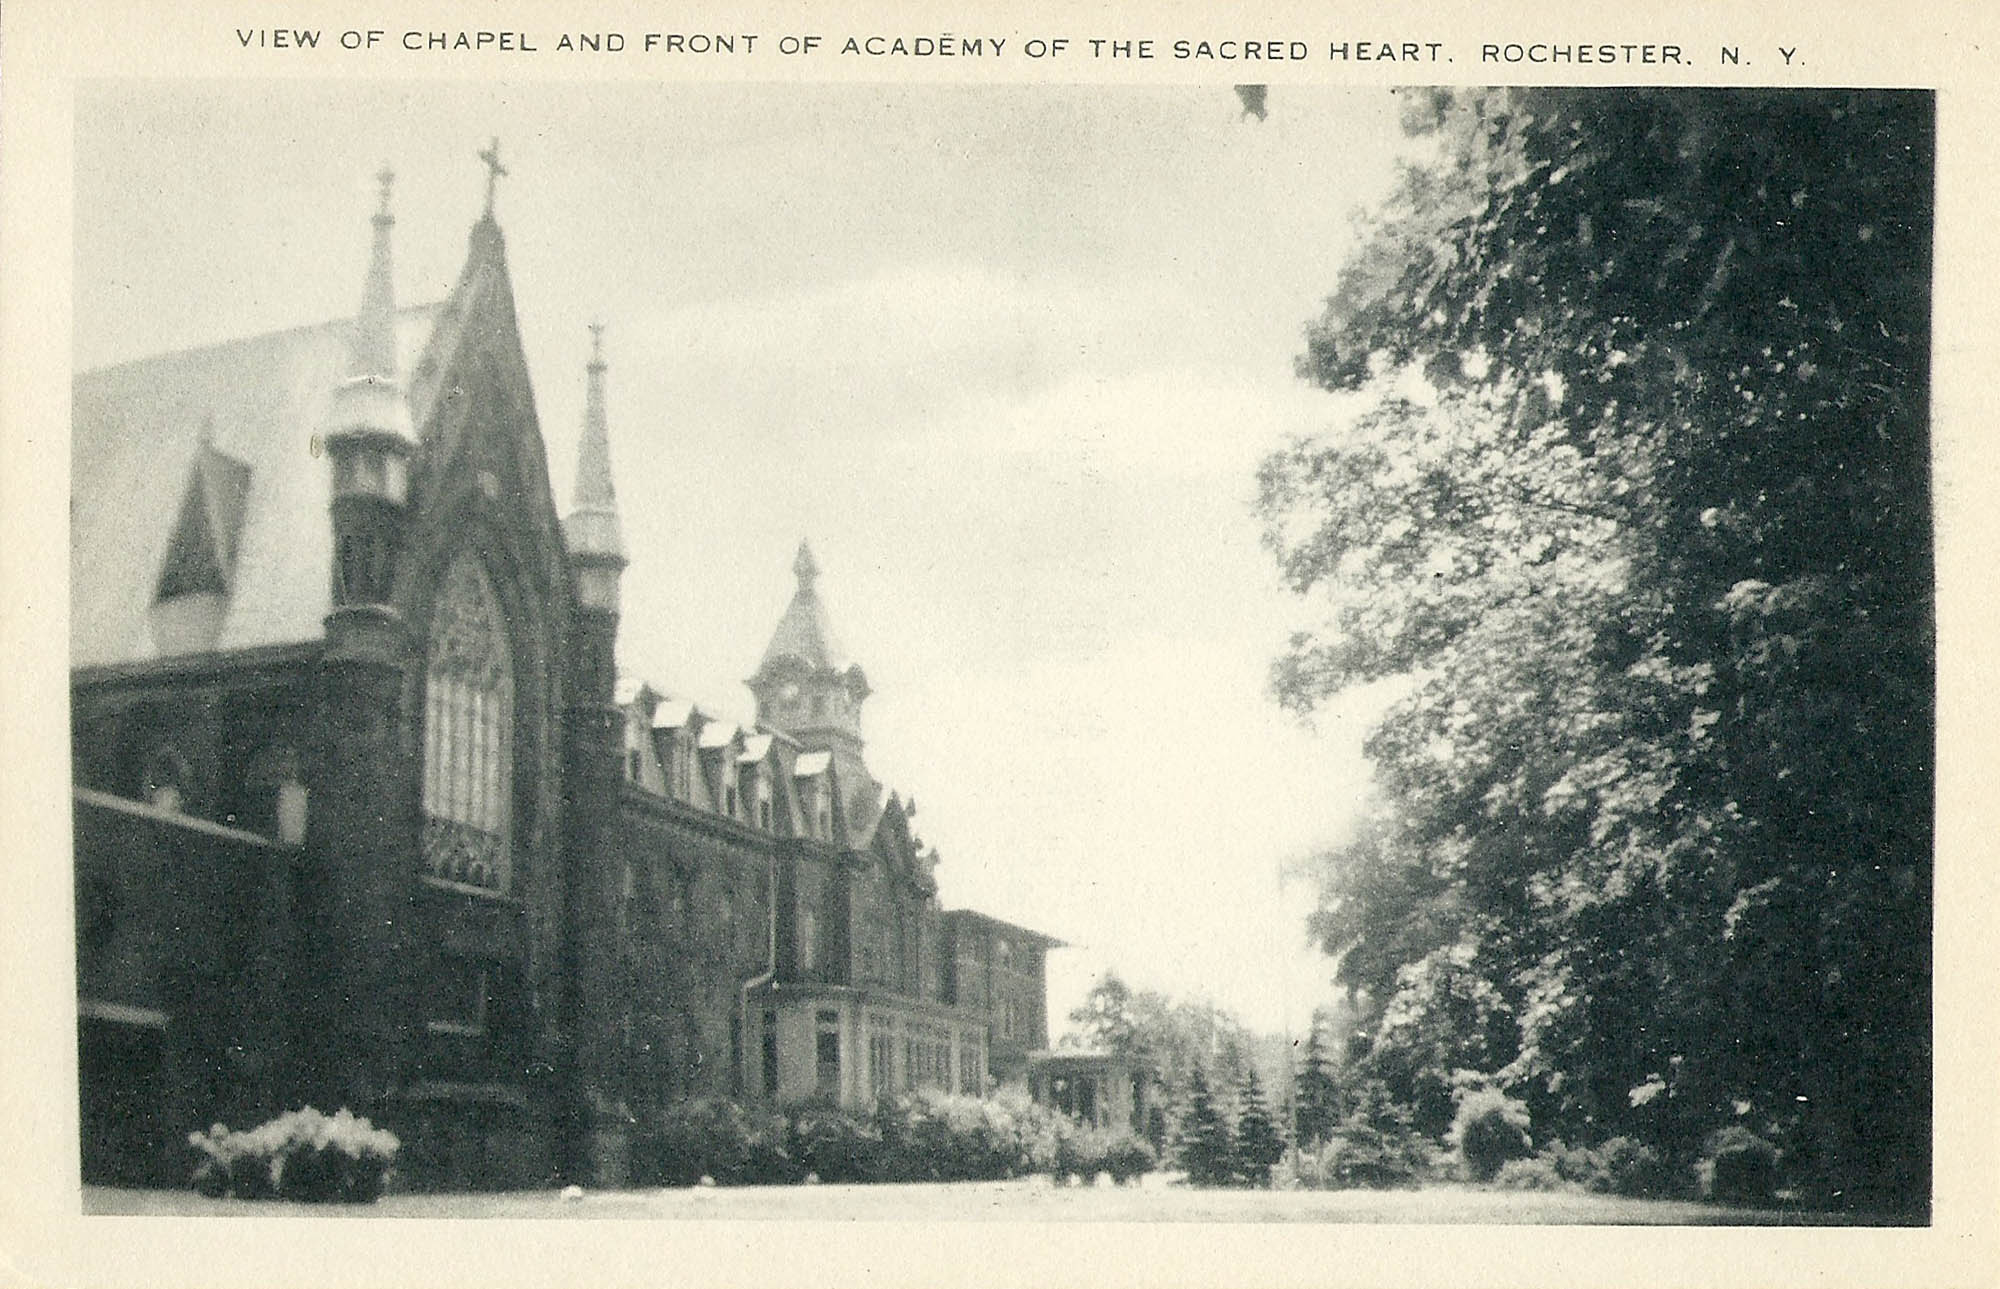 Academy of the Sacred Heart - Chapel (#2)